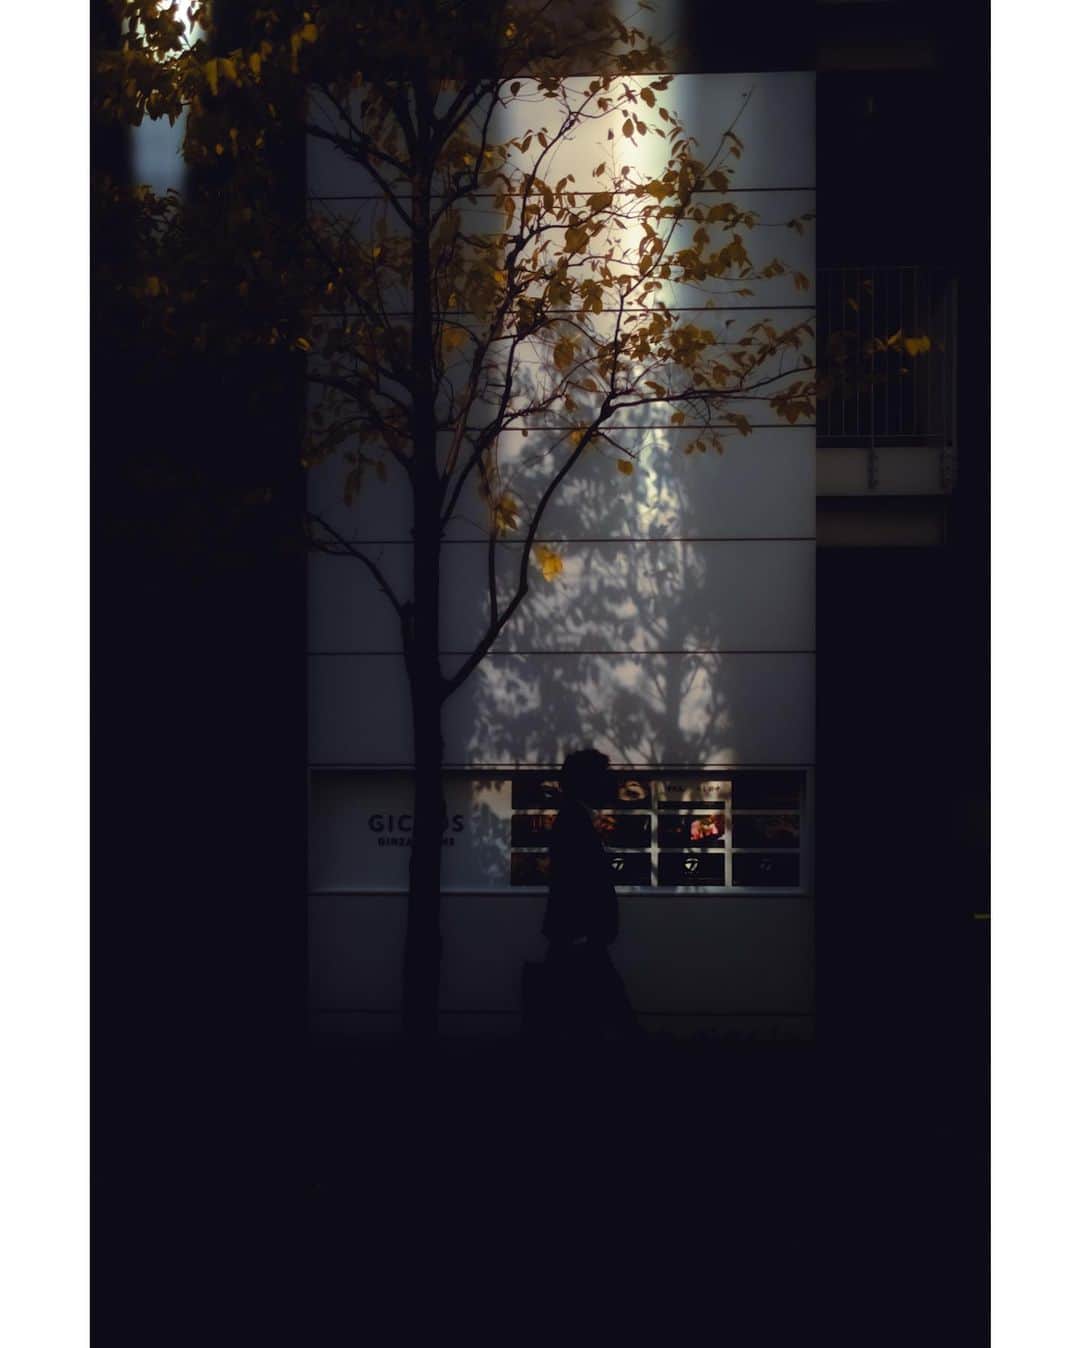 kazhixのインスタグラム：「Tokyo Rhapsody  -Light and shadow on the street-  shot on iphone12  #映画のワンシーンのような一枚を   #ShotoniPhone #apple #instagram  #igersjp #HelloFrom Tokyo #ファインダー越しの私の世界  #tokyocameraclub #daily_photo_jpn #tokyoartsandculture #JapanCityBlues #TokyoTokyo #streetfinder #eyephotomagazine #cinema_streets  #urbanromantix #street_avengers #streetleaks #sublimestreet #streets_storytelling #storyofthestreet #streetsgrammer #streetmoment #voidtokyo  #streetgrammers #shadow_magazine #photo_f16 #cinematicshine」